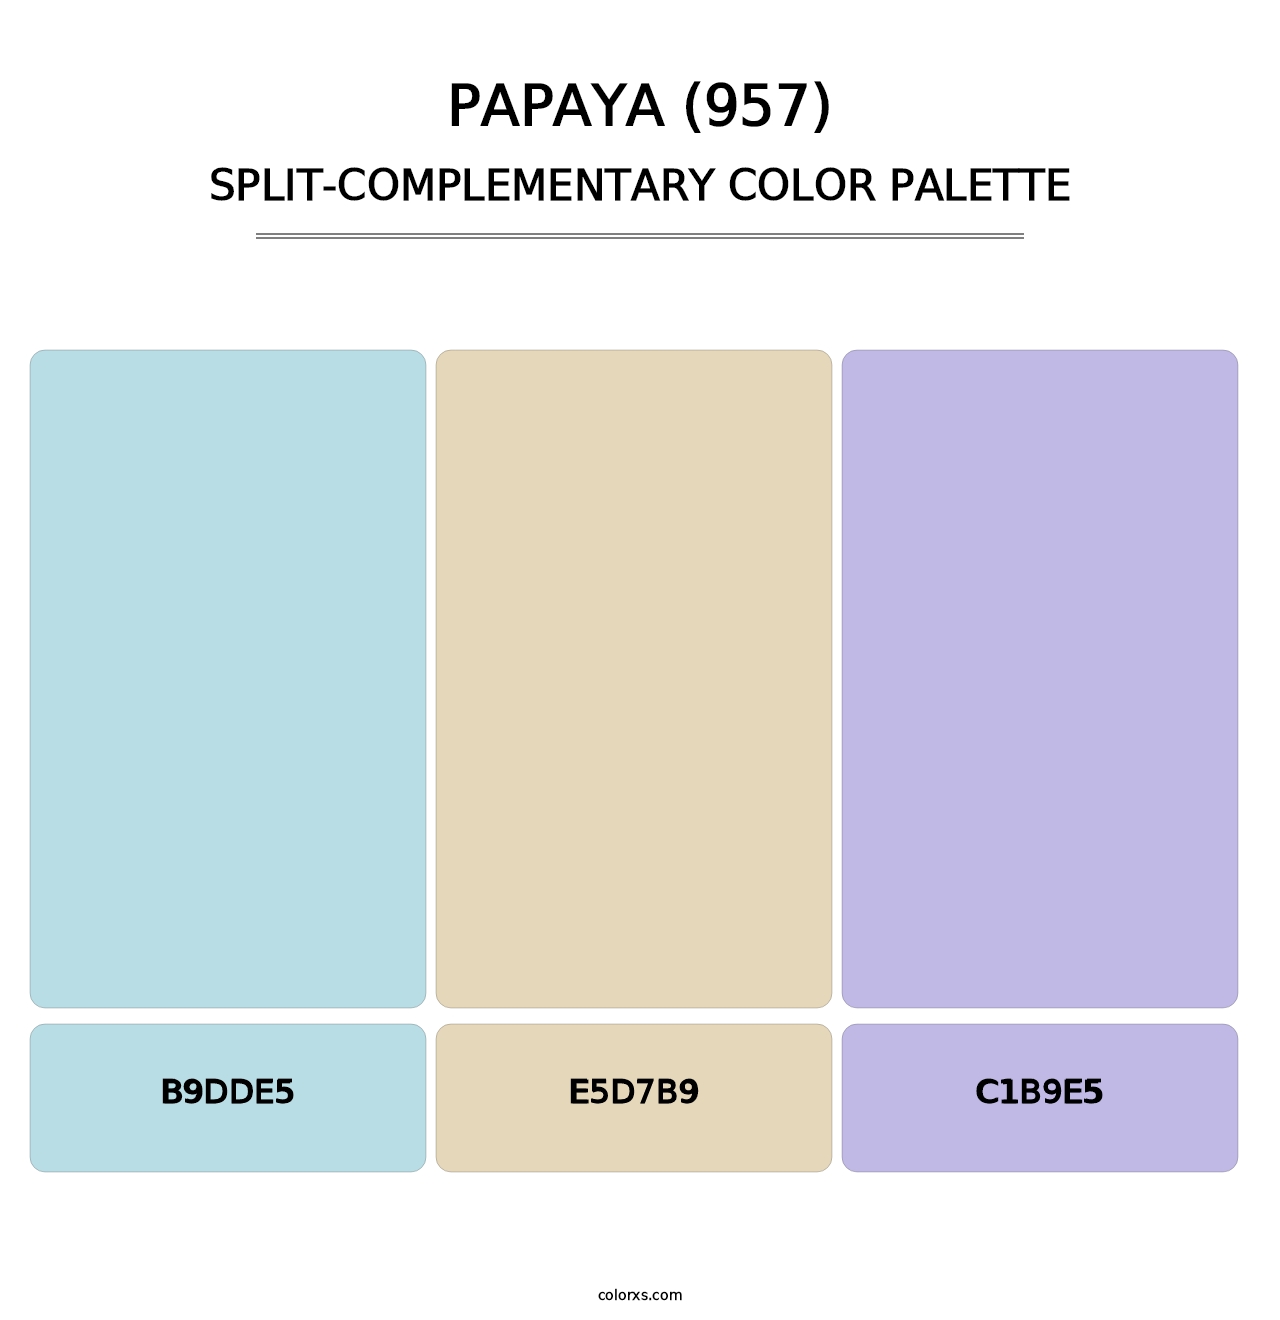 Papaya (957) - Split-Complementary Color Palette